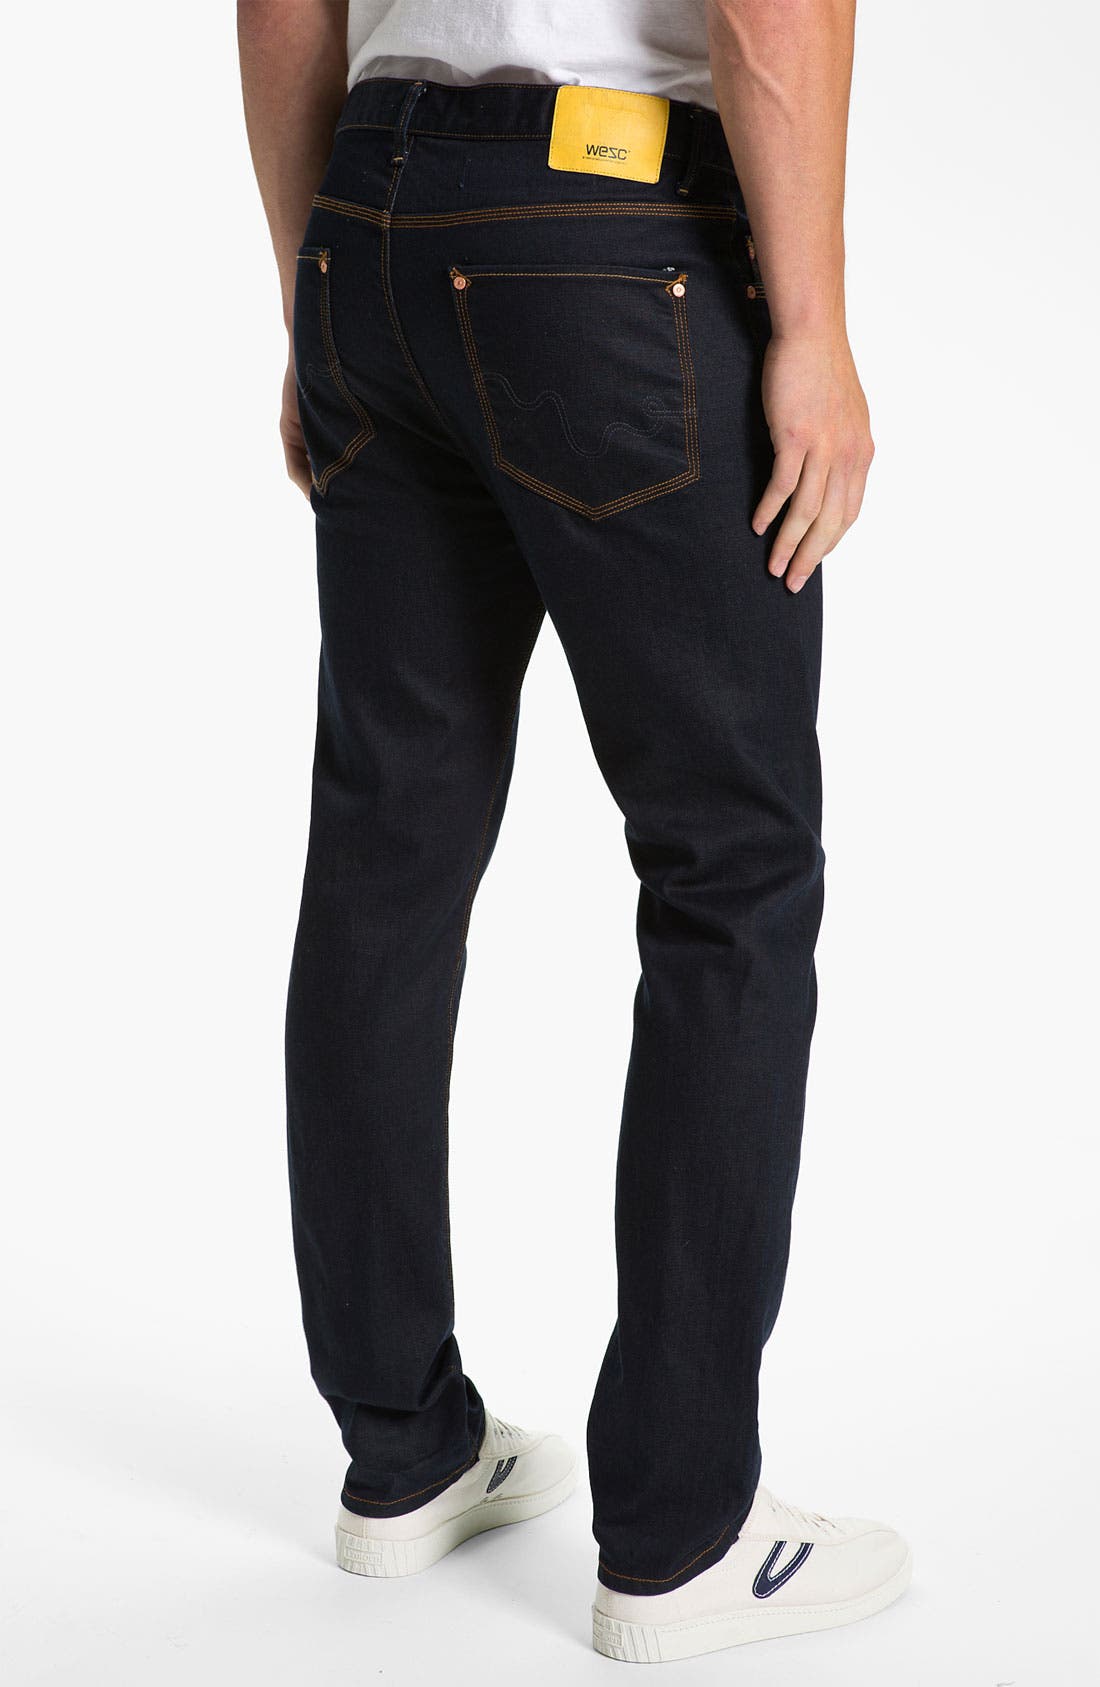 WeSC 'Eddy' Slim Fit Jeans (Raw Clean 